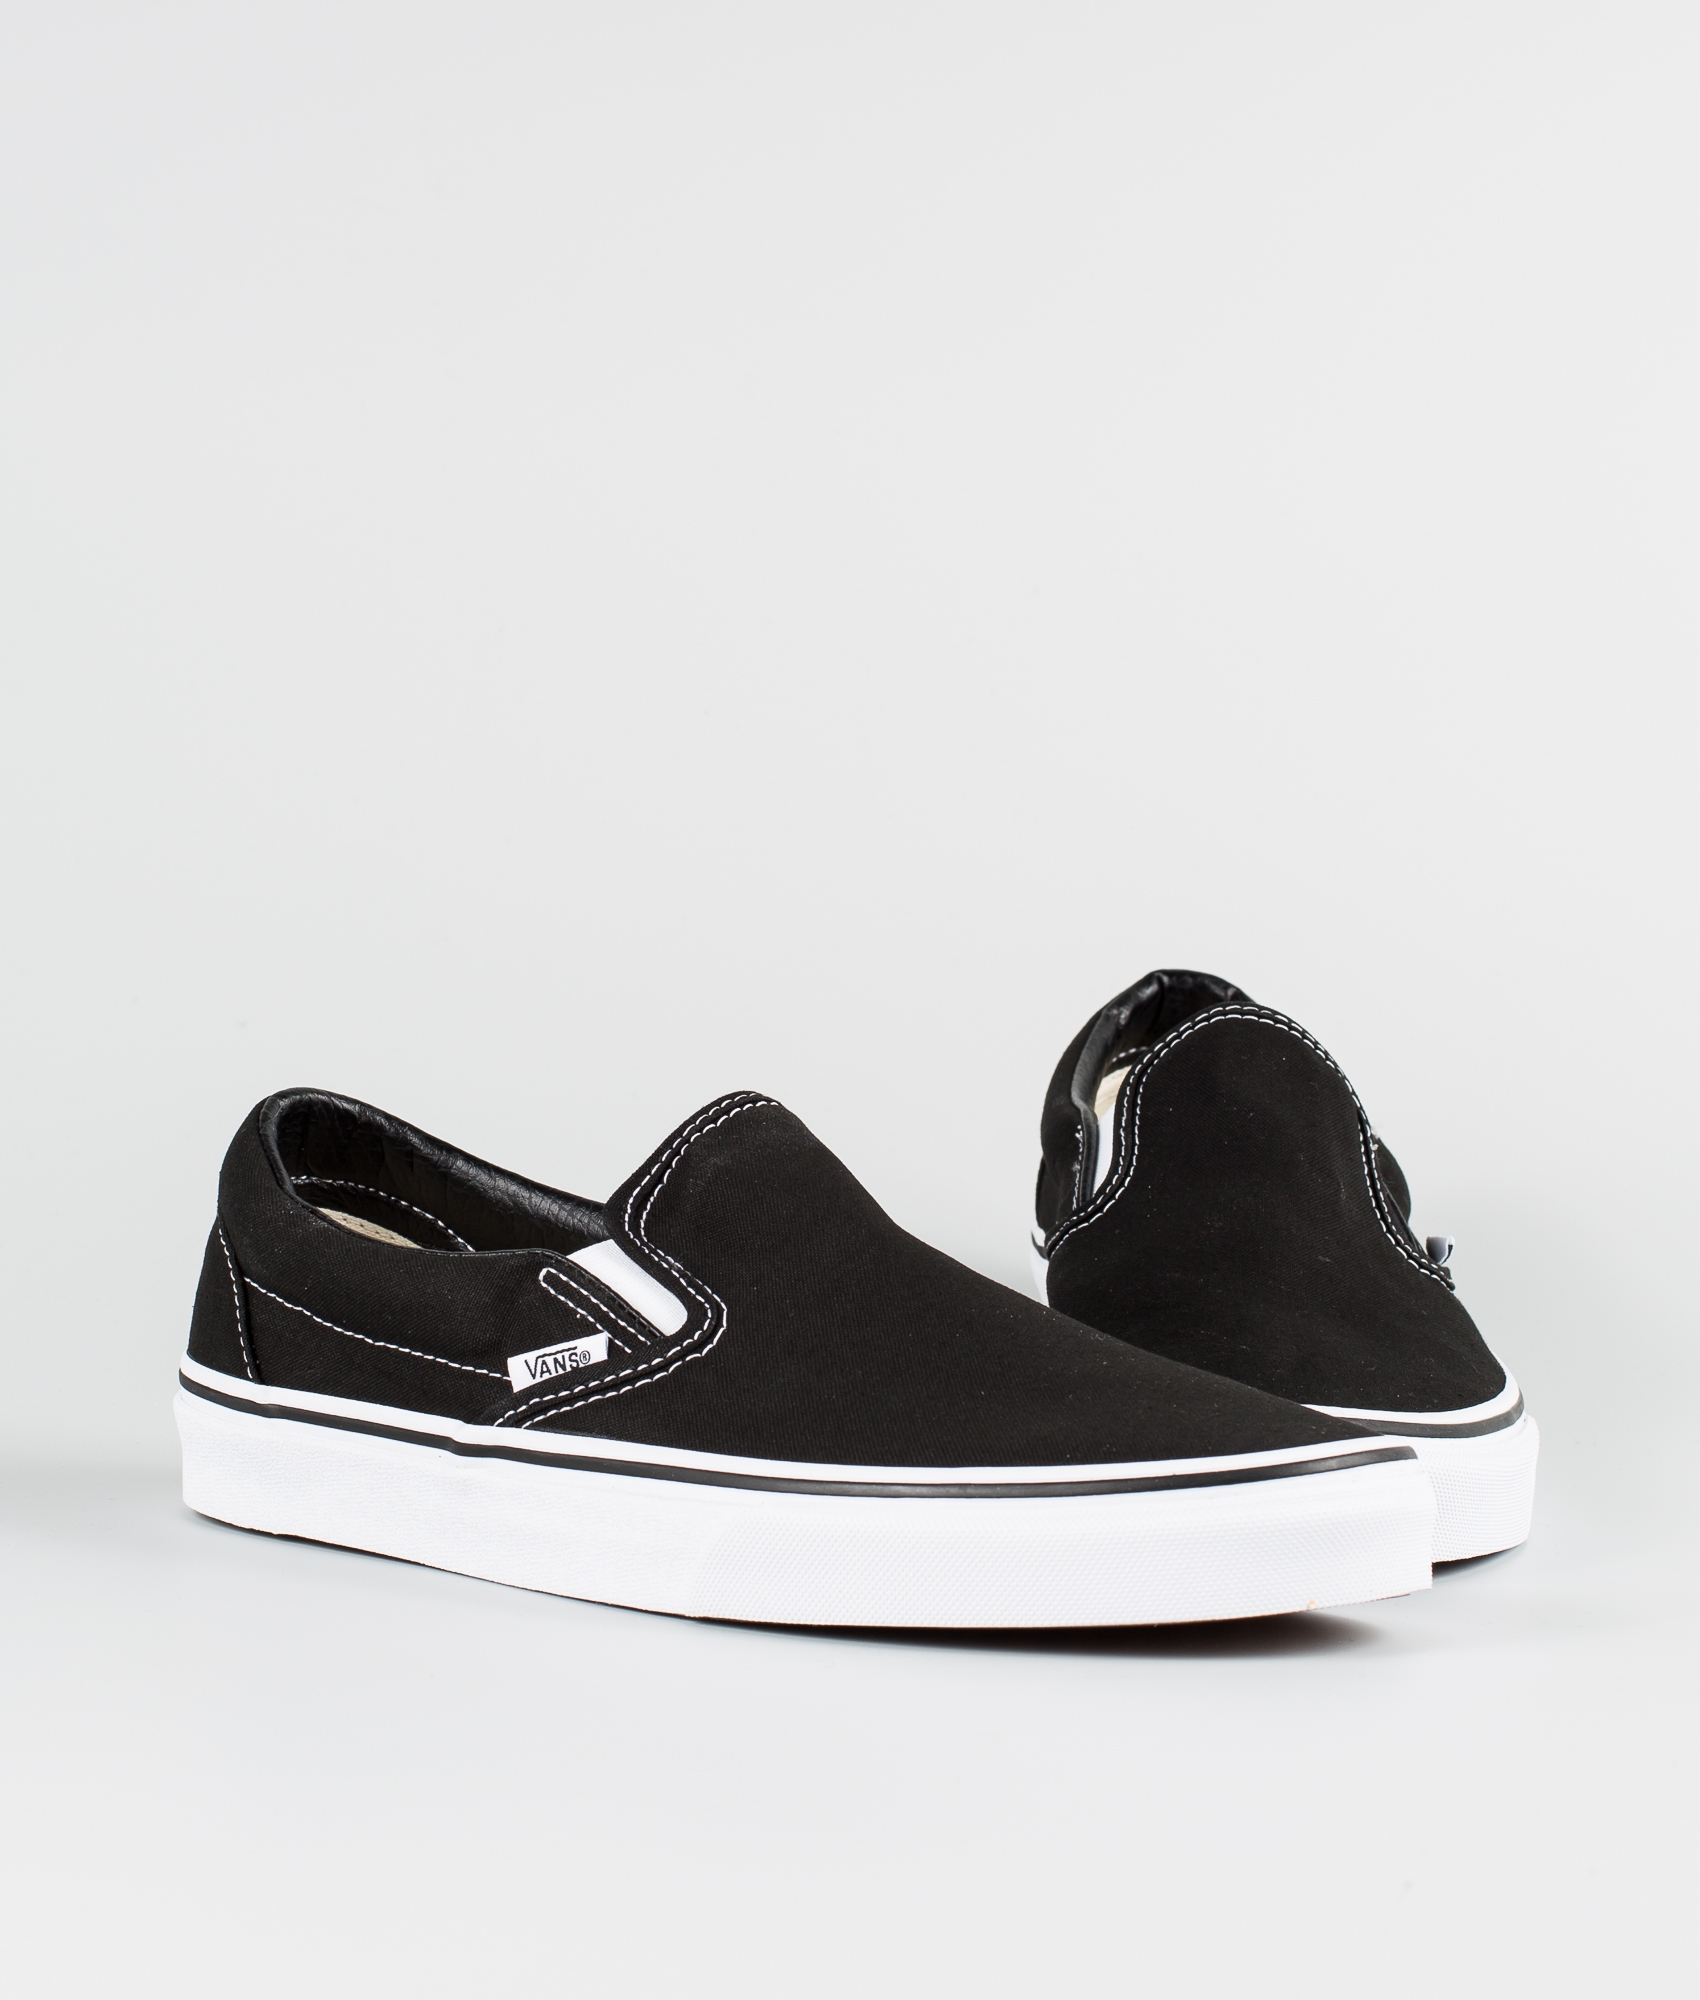 vans classic slip on black monochromatic shoes